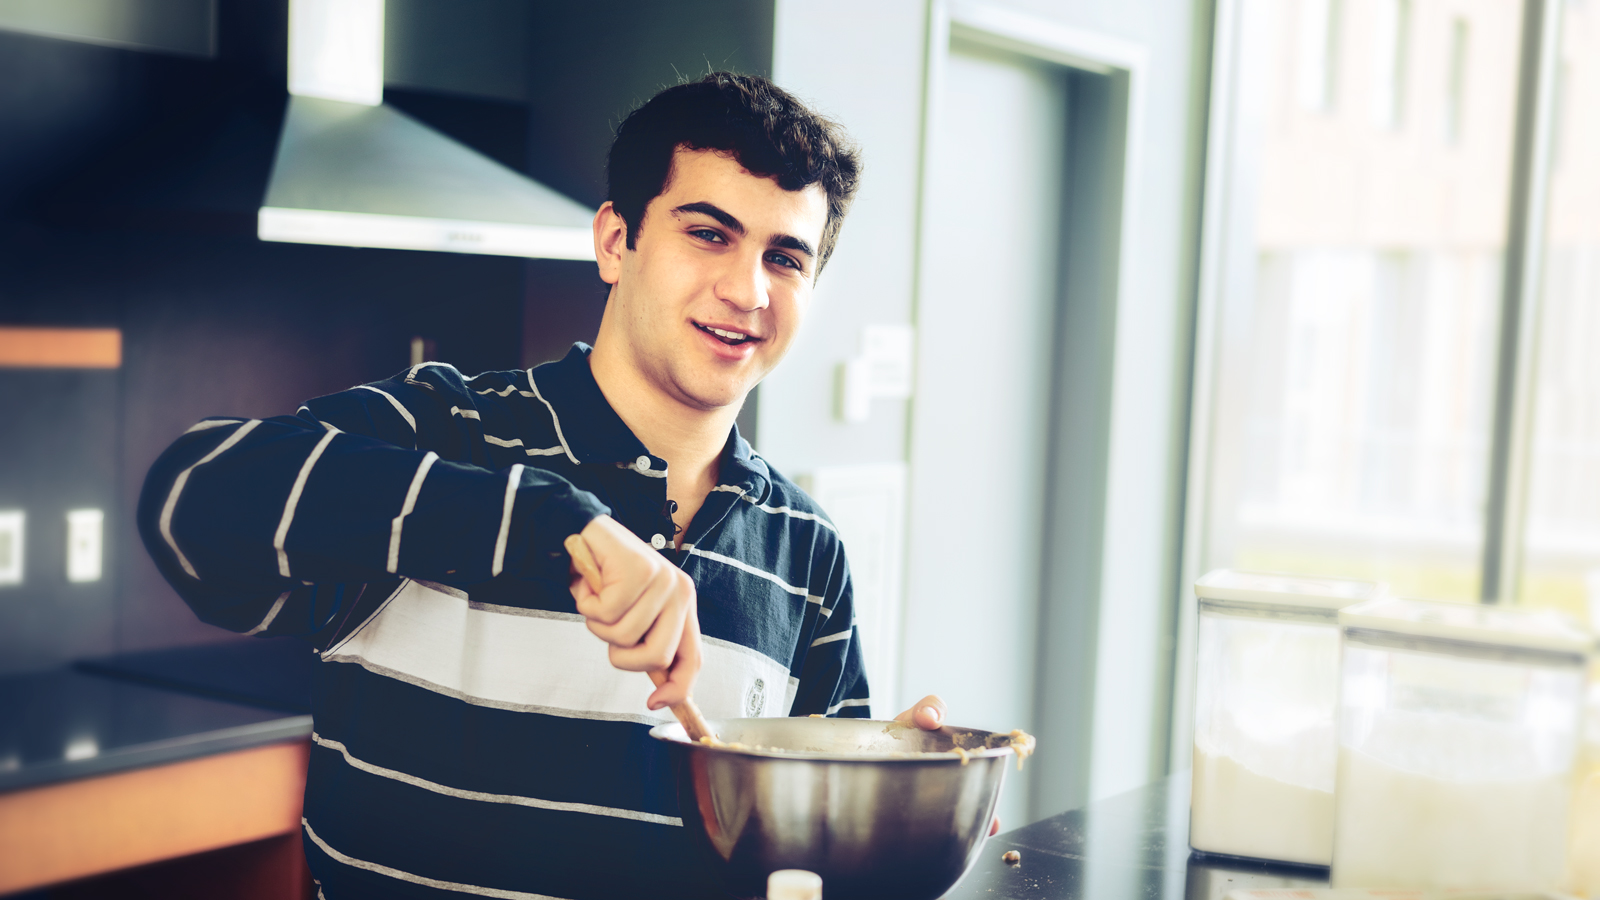 Matthew Merril stirs ingredients in a metal bowl in a kitchen